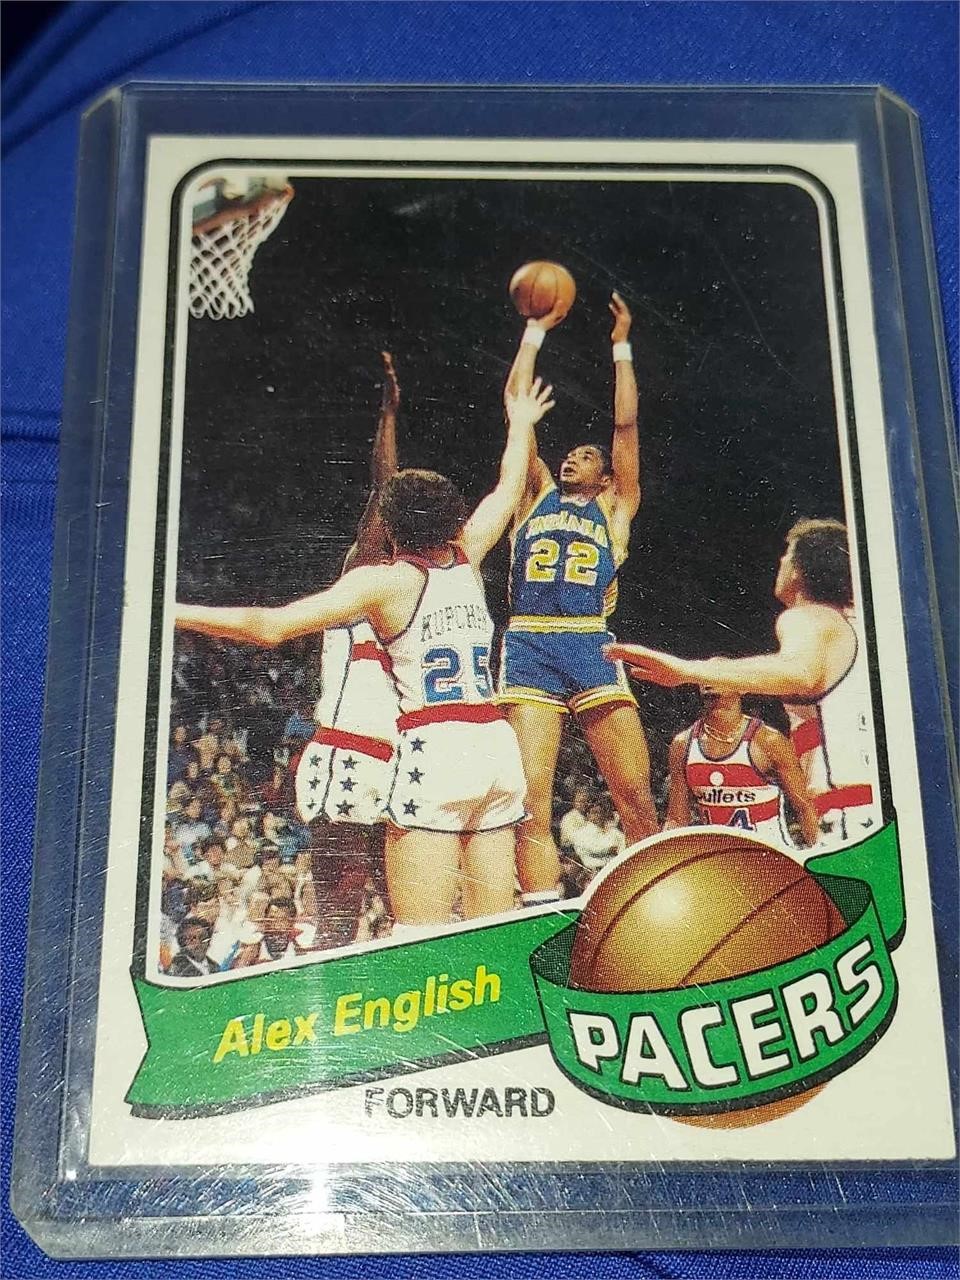 1979-80 Topps Alex English Rookie card